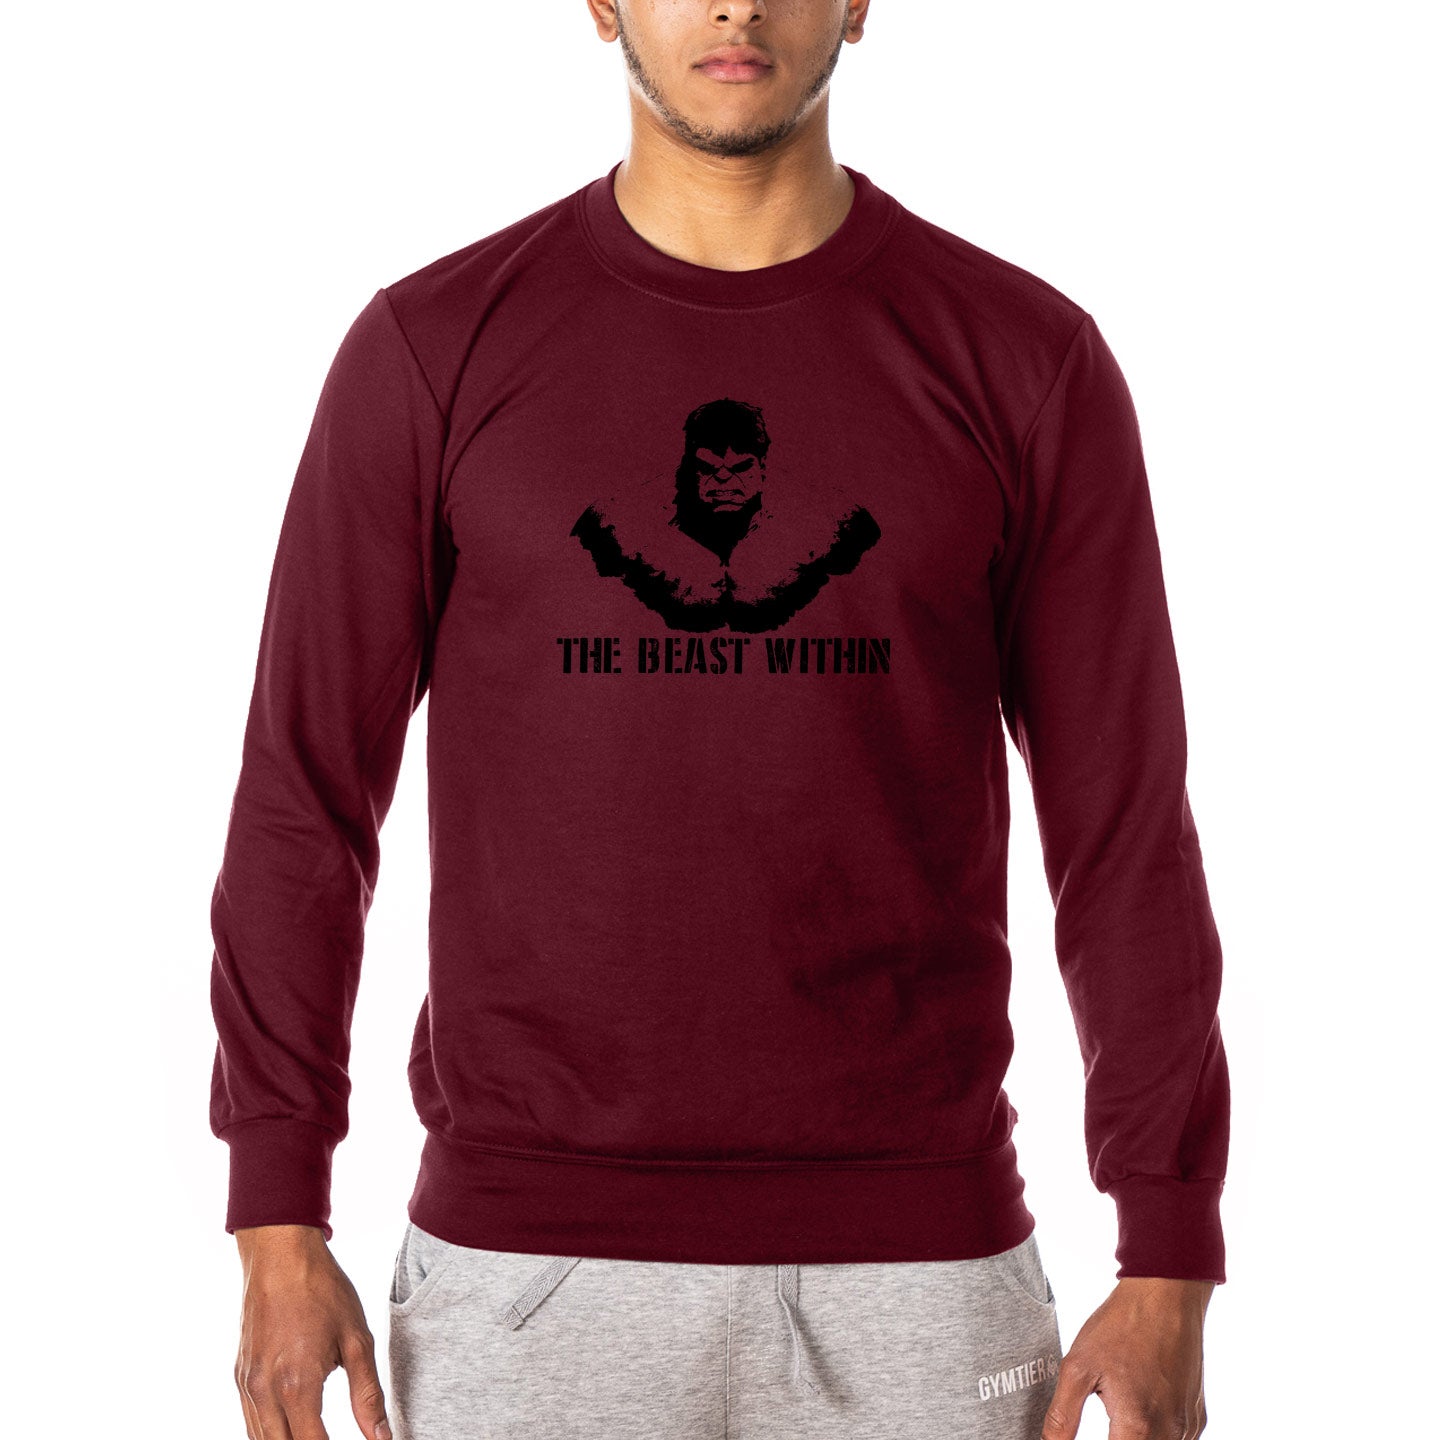 The Beast Within - Gym Sweatshirt